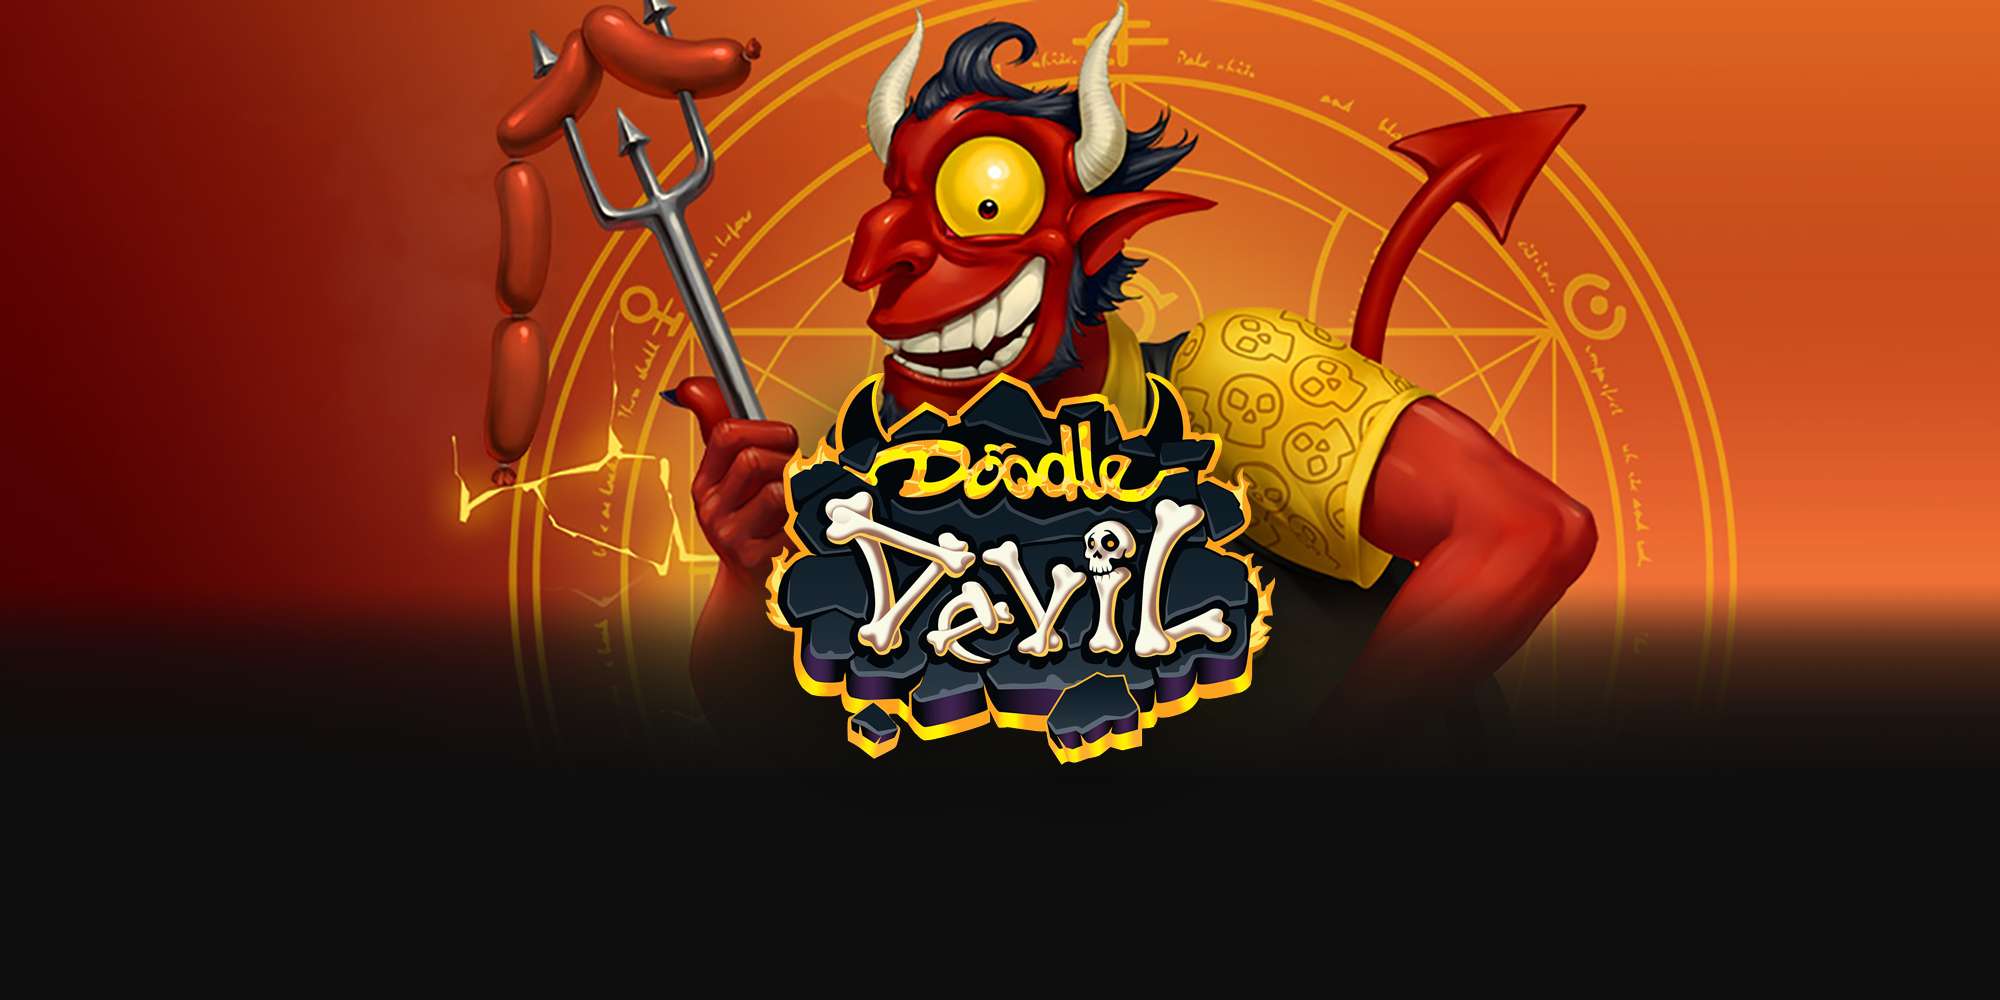 doodle devil mortal sin